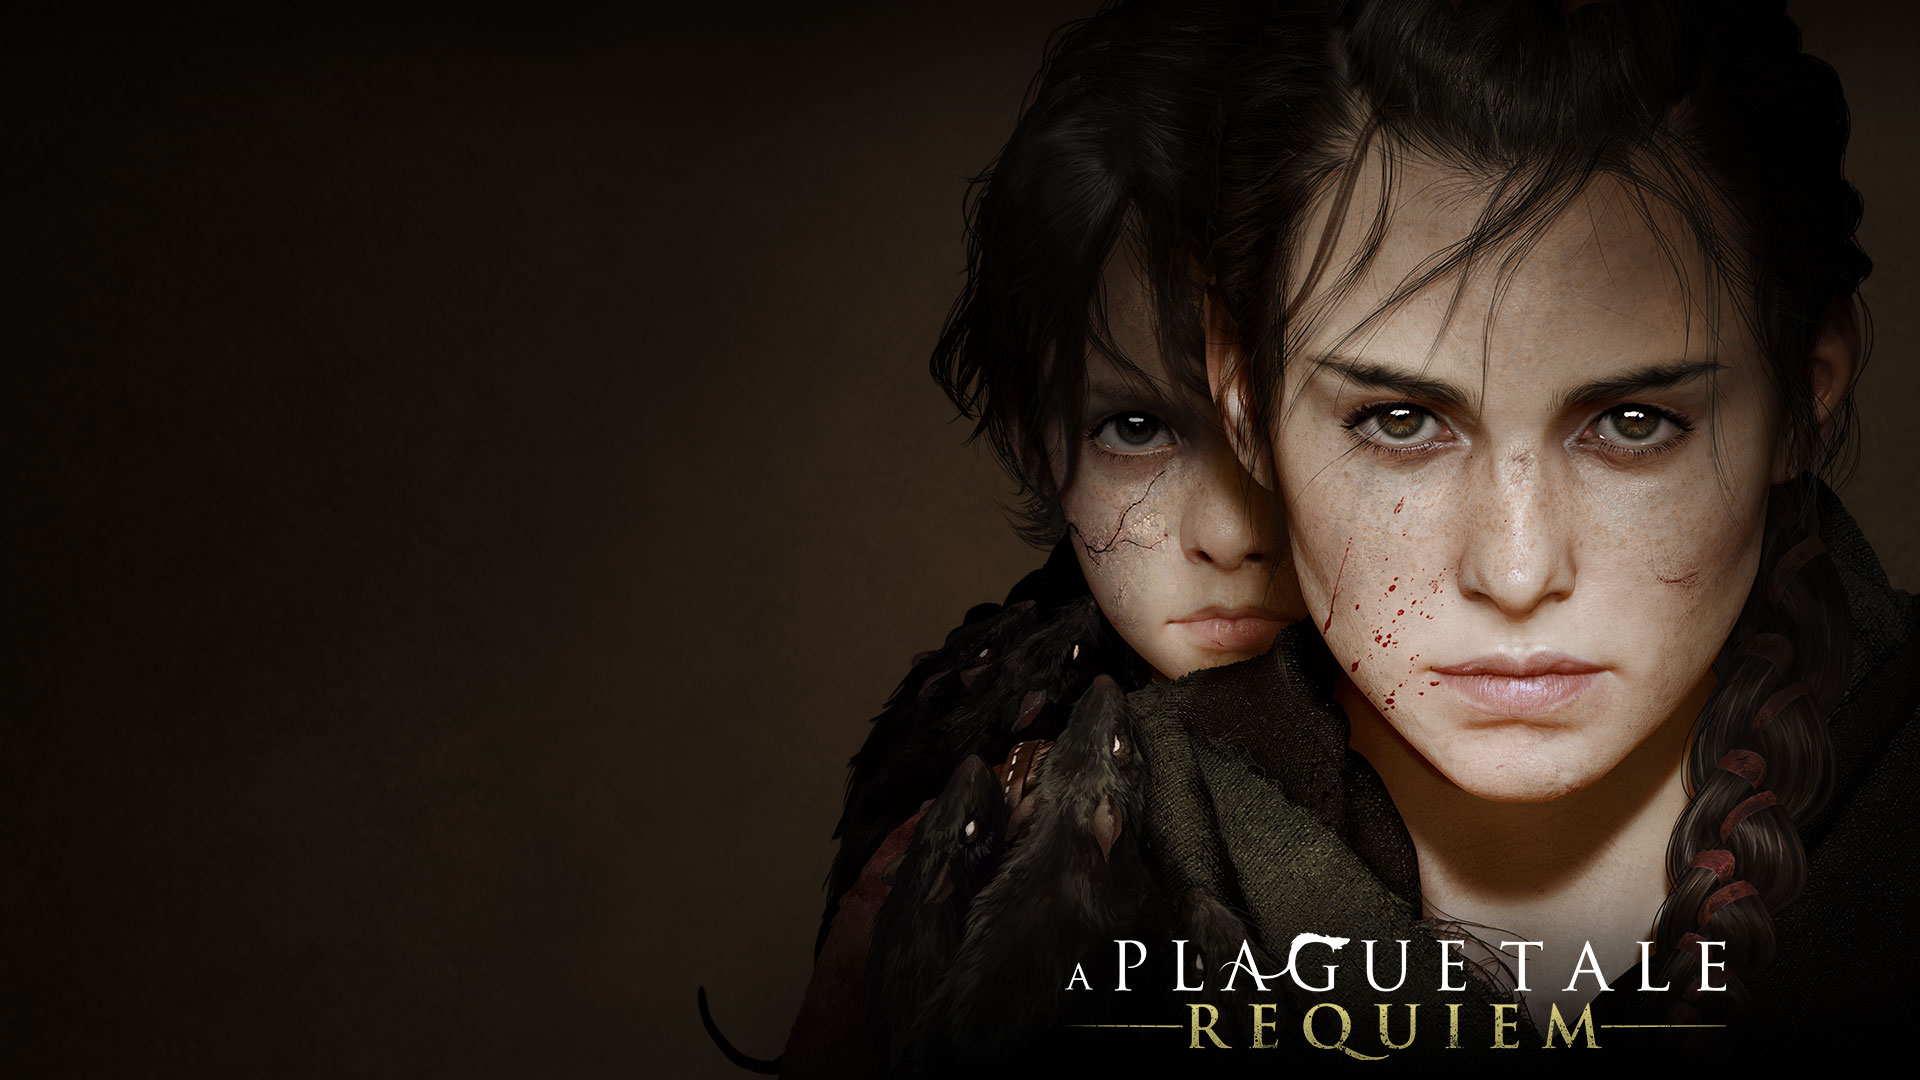 A Plague Tale Requiem - Parte 2: Milhões de Ratos!!! [ Xbox Series